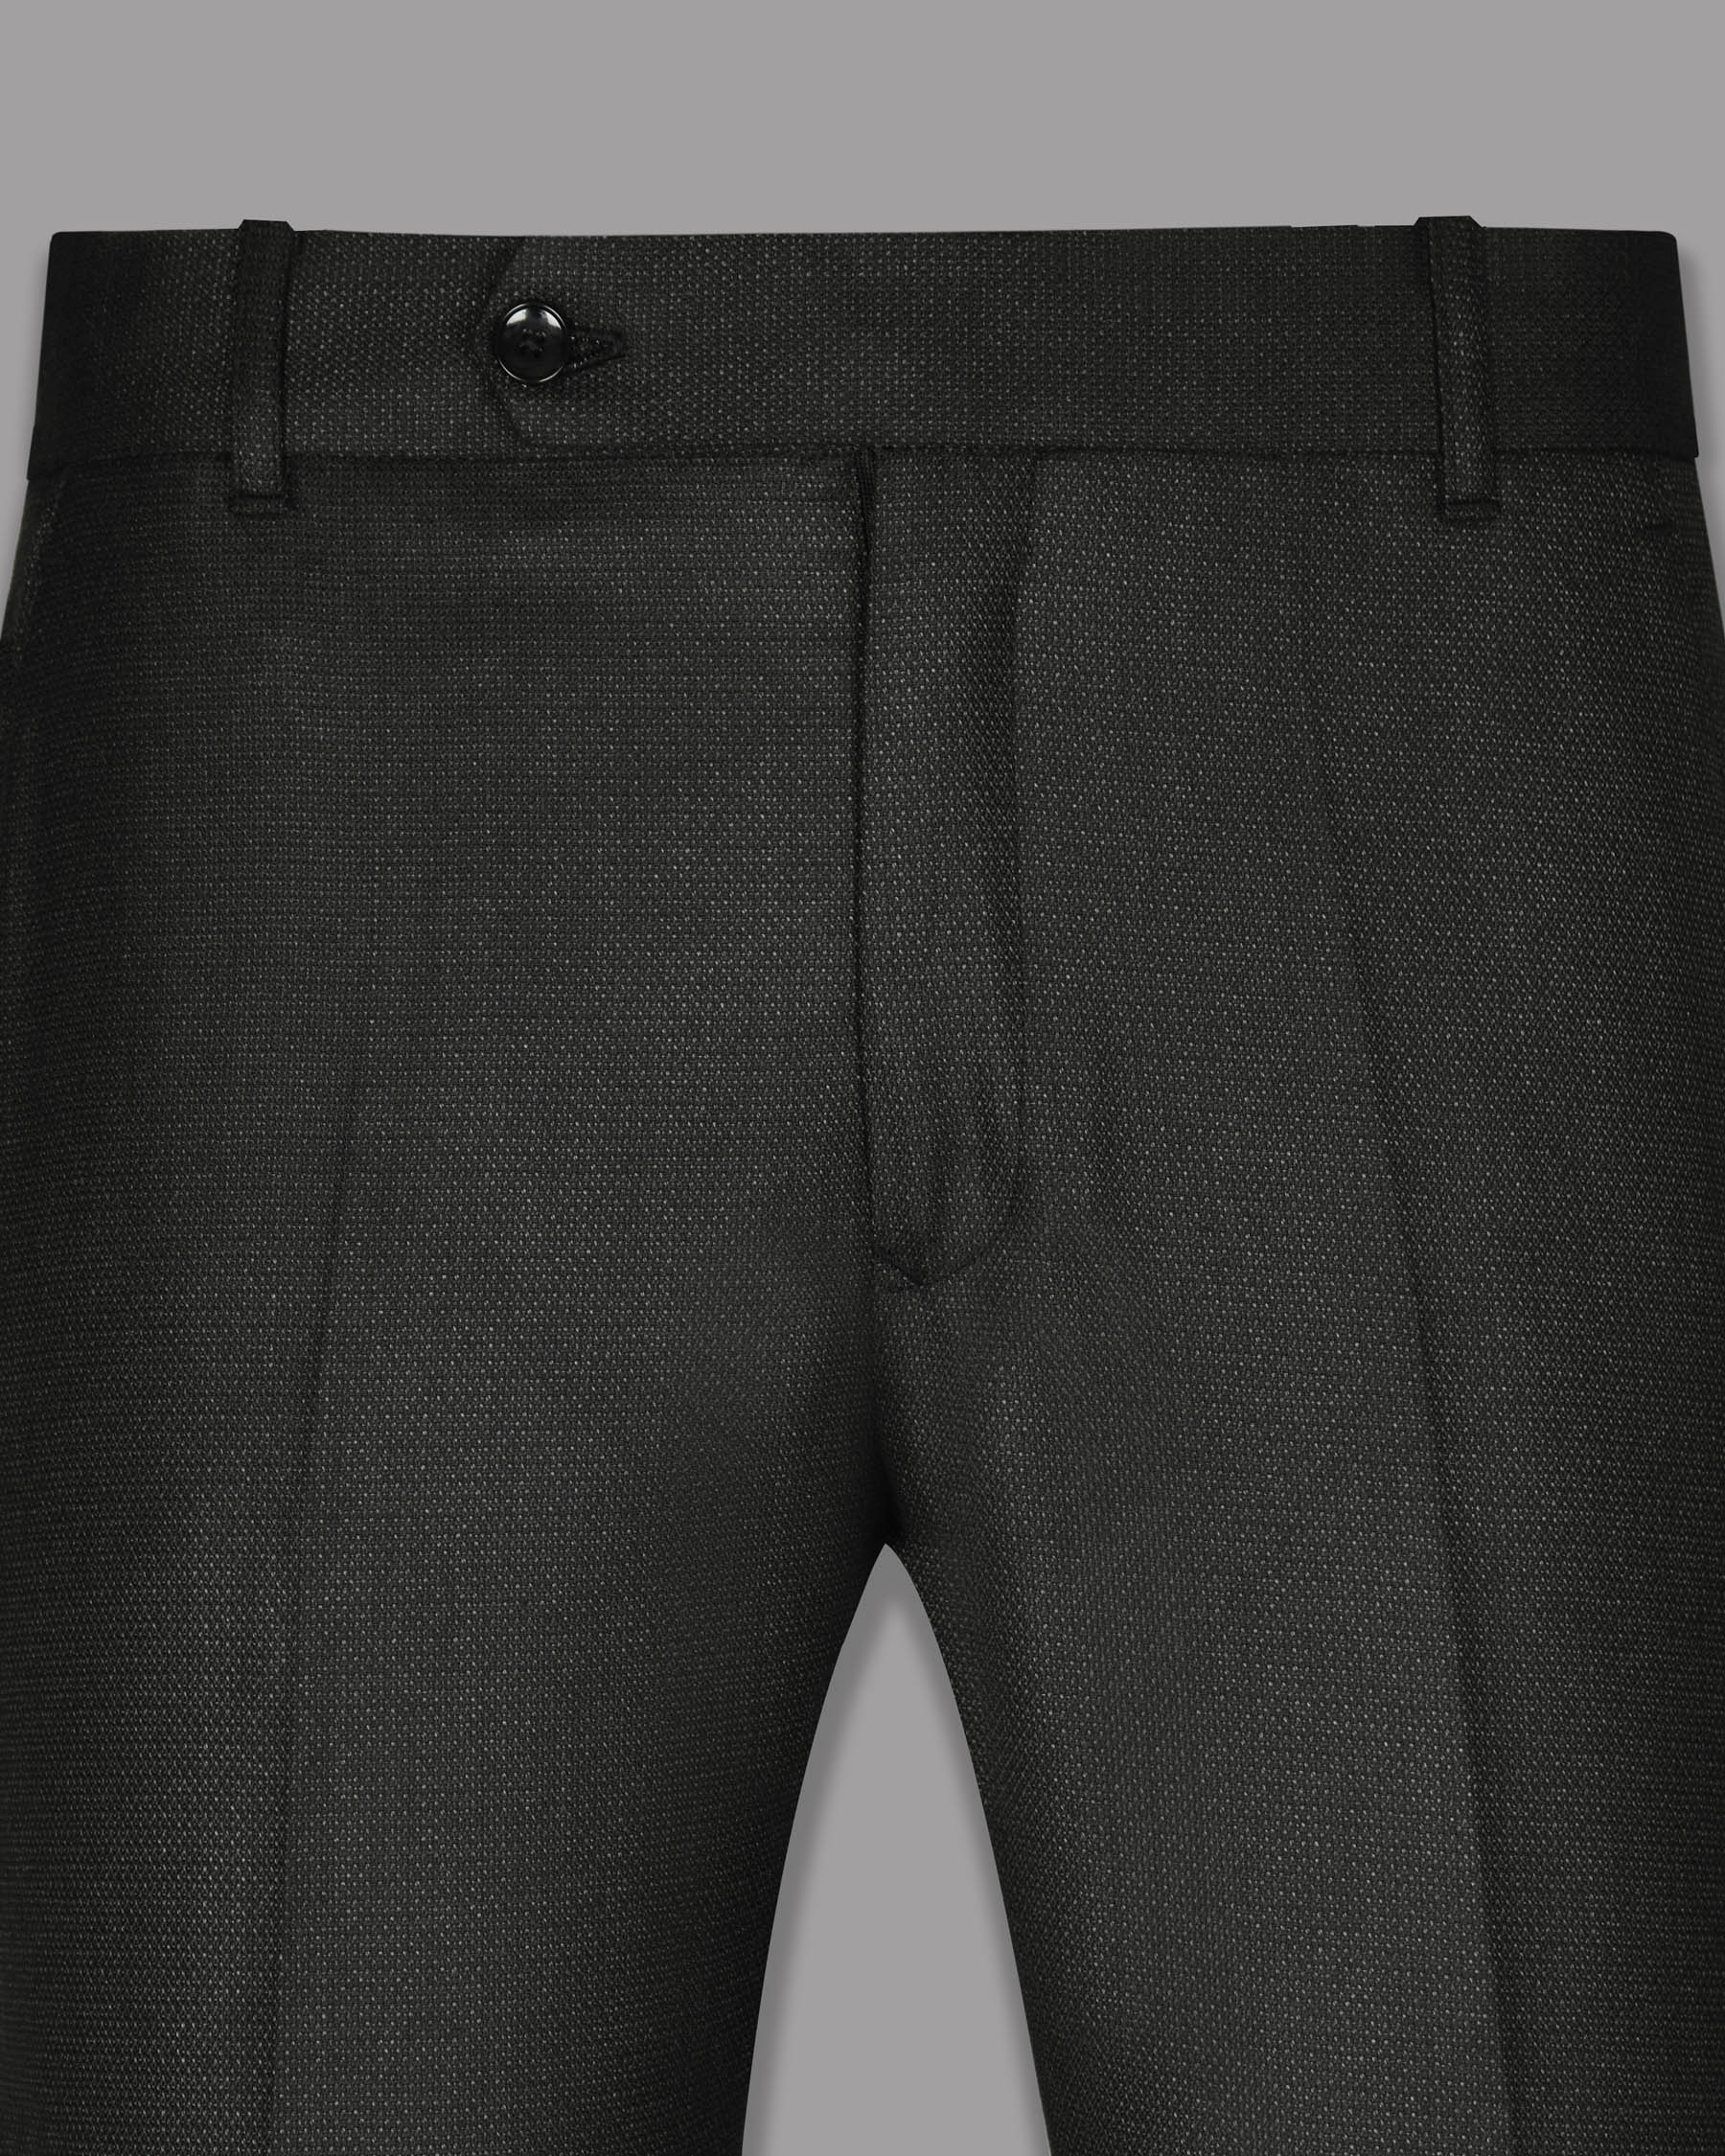 Jade Black with Subtle Grey texture Wool-Silk blend Pant T808-42, T808-32, T808-38, T808-40, T808-44, T808-28, T808-36, T808-30, T808-34